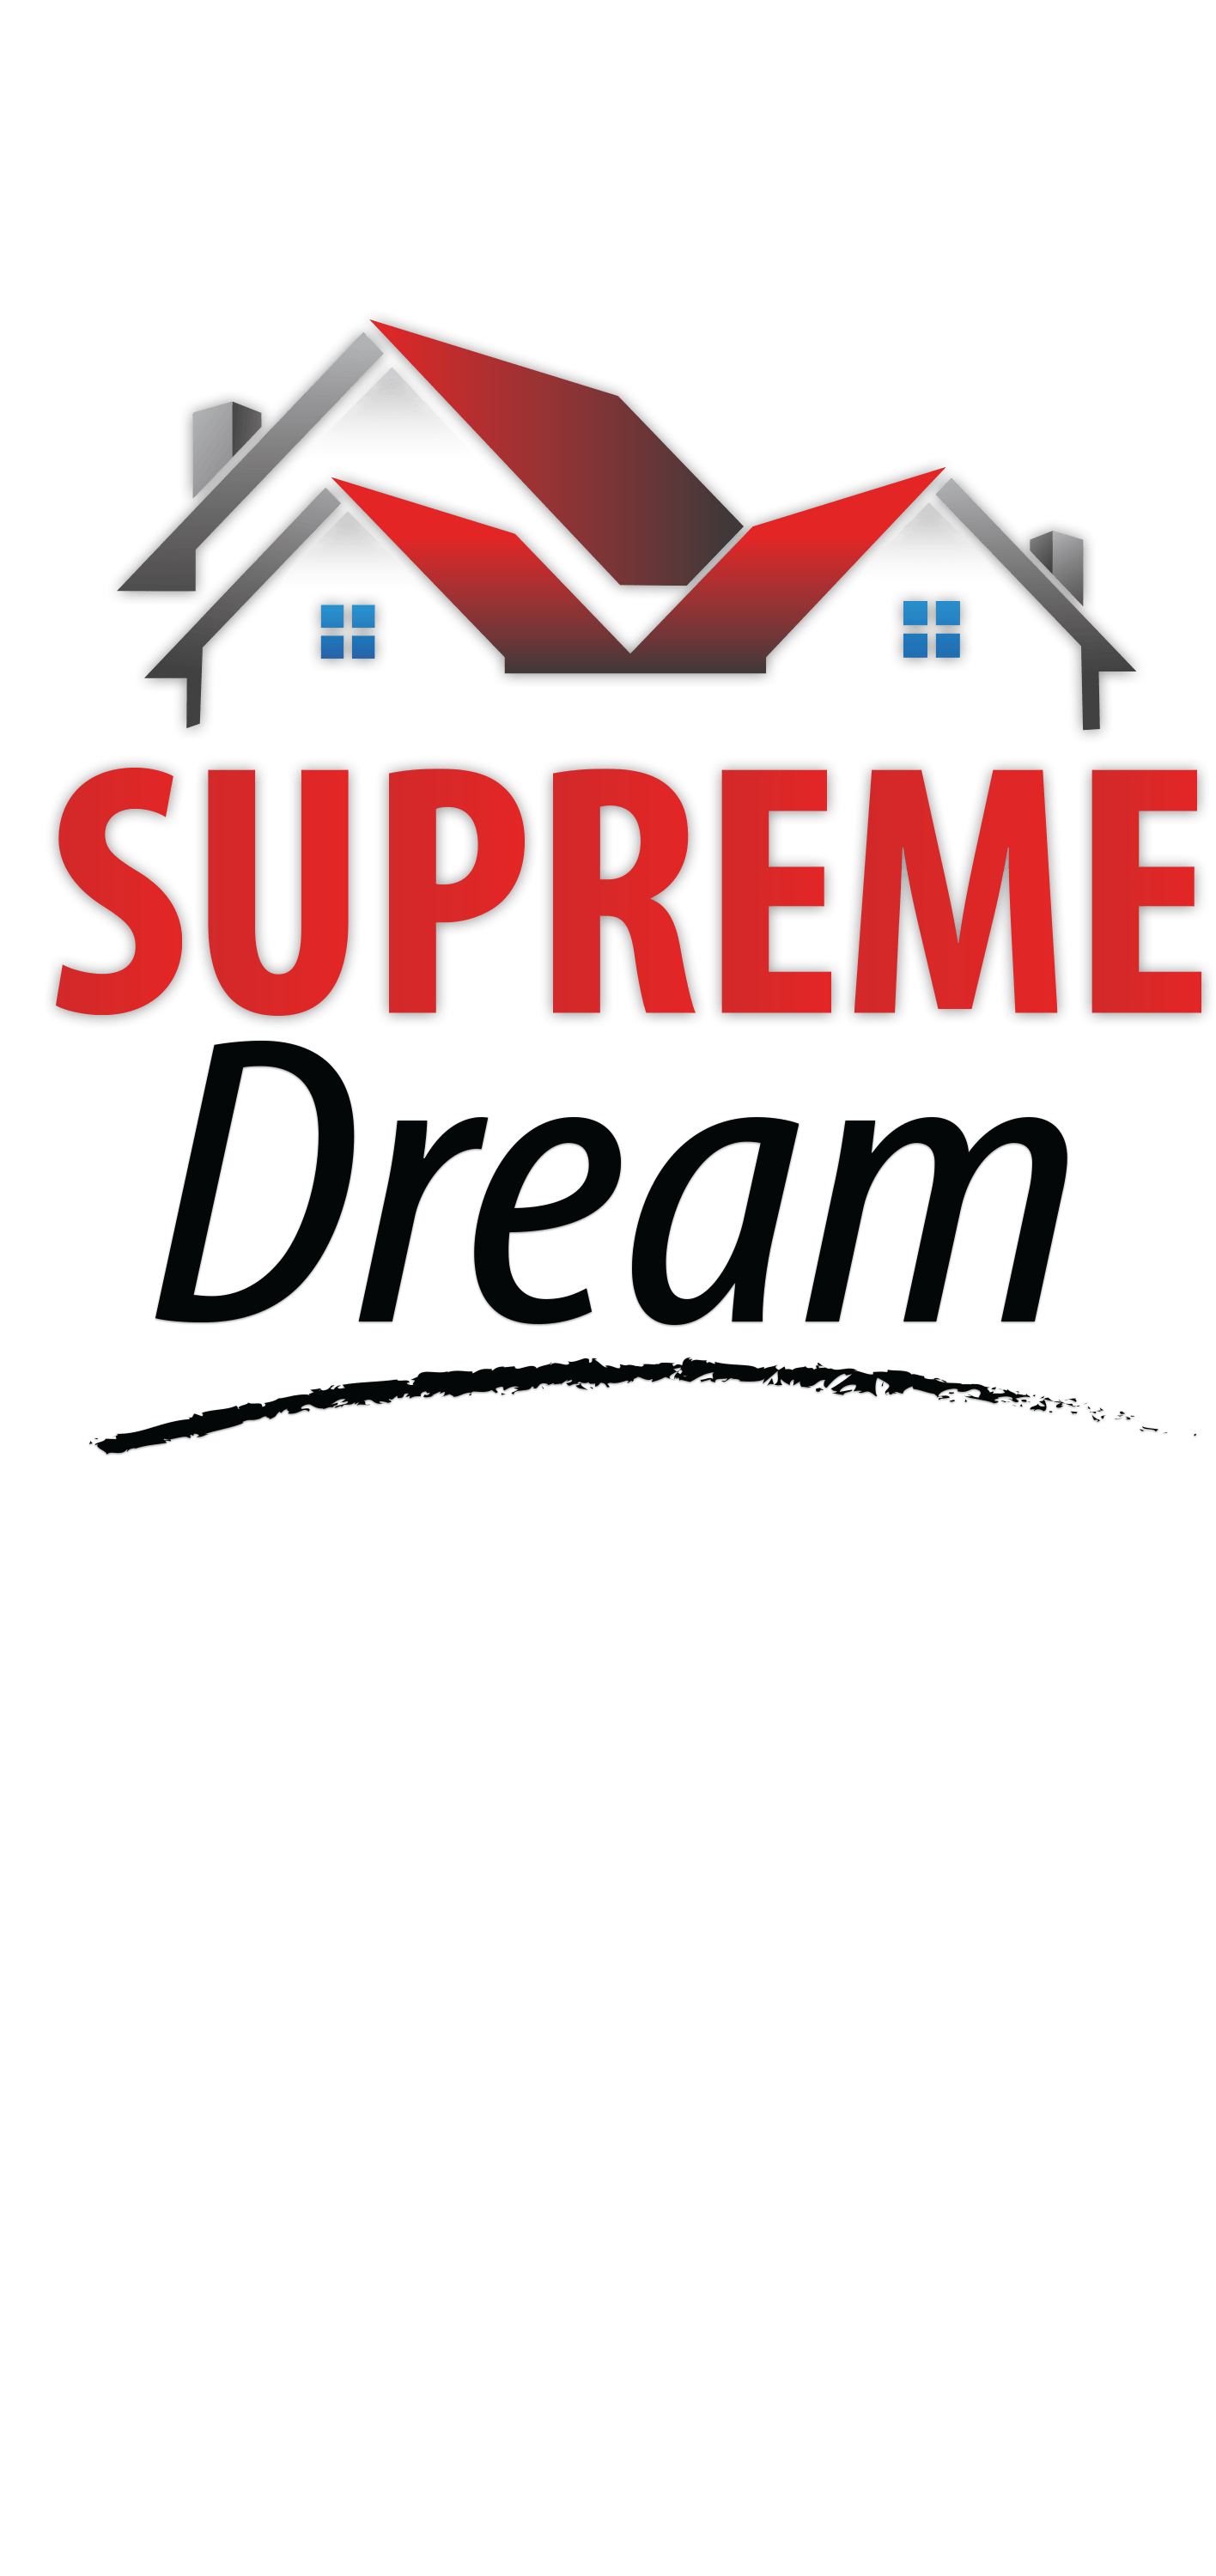 Supreme Loan Logo - Supreme Dream Stacked Red Final Lending Dallas